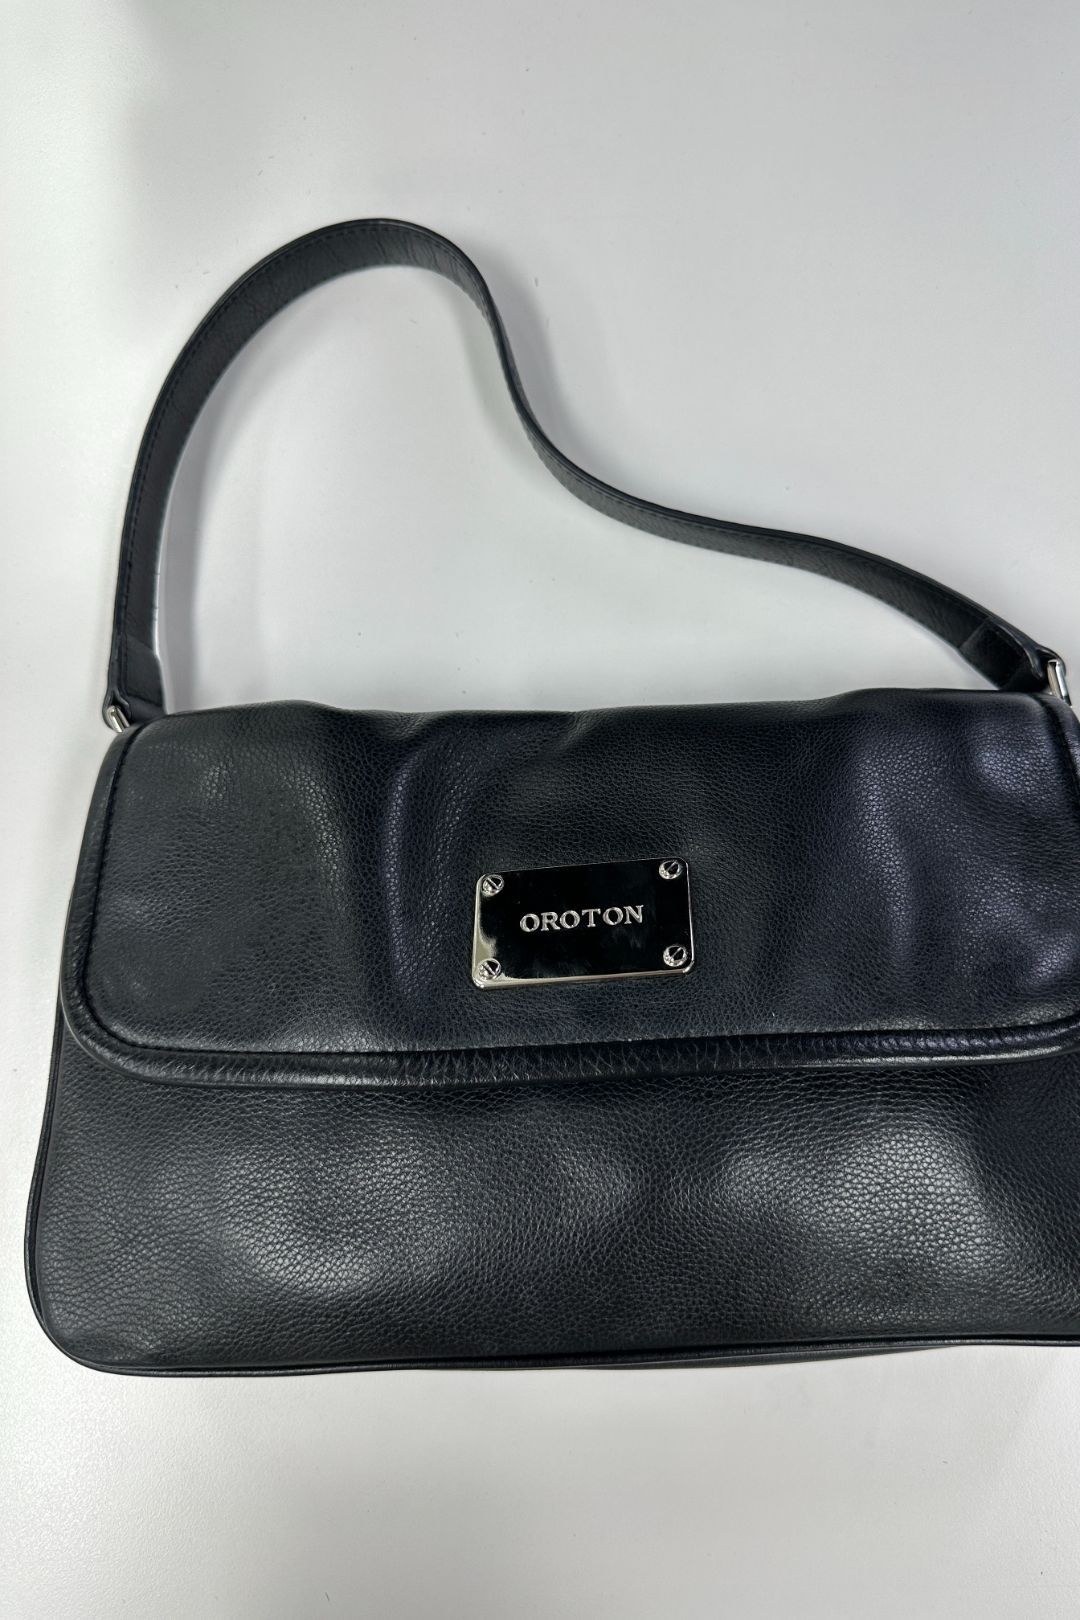 Oroton Roche Leather Jacquard Flip Over Bag in Black